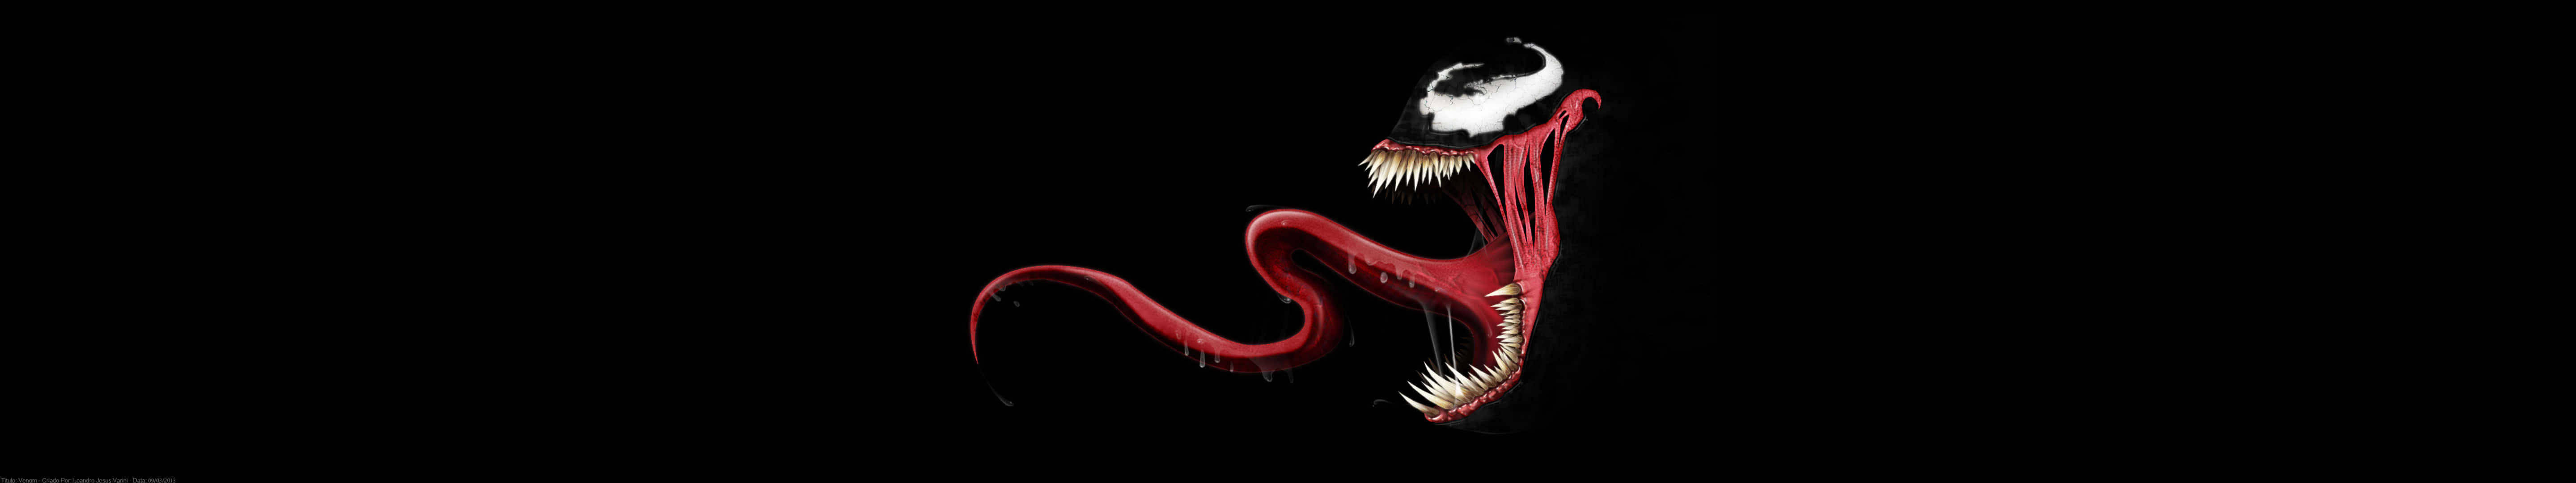 Venom Mouth Triple Monitor Wallpaper